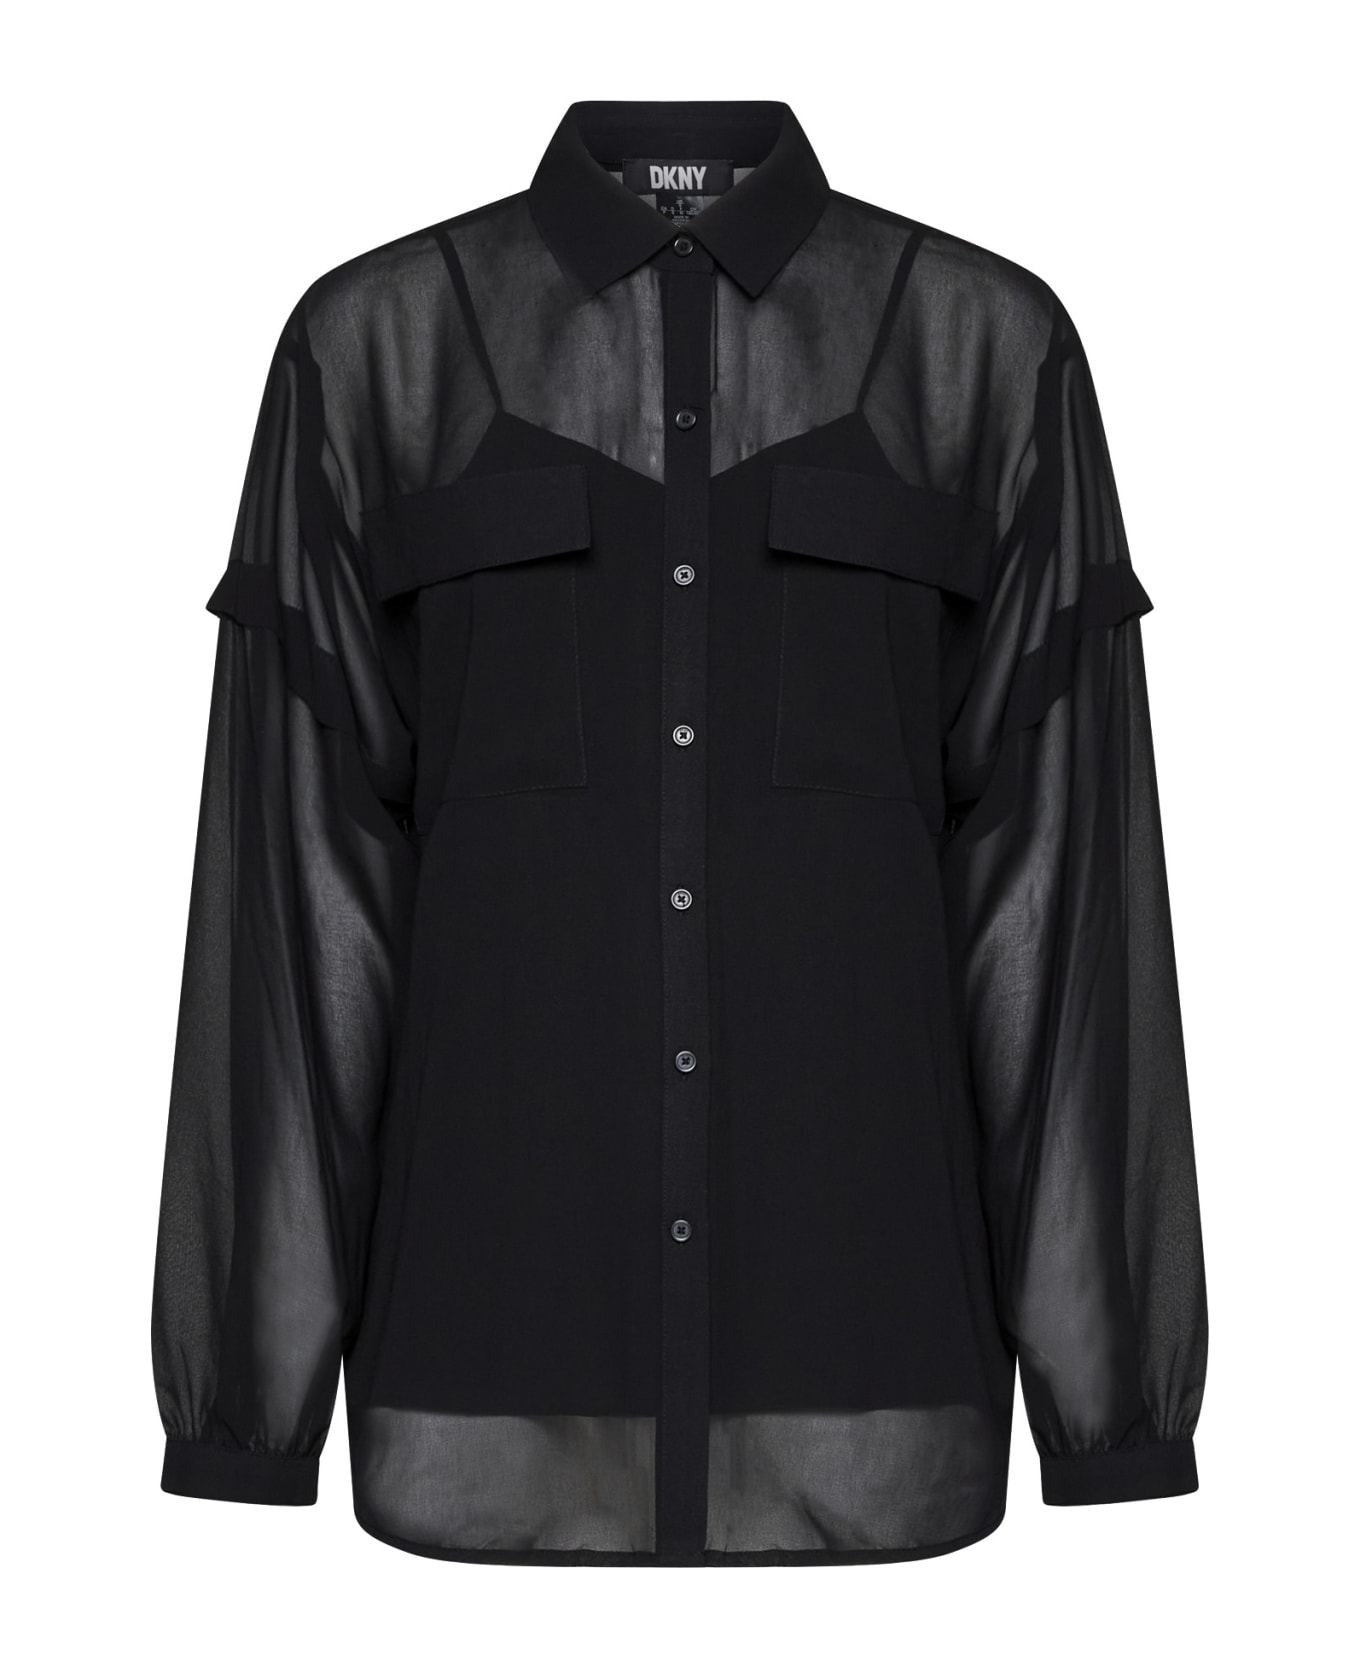 DKNY Shirt - Black